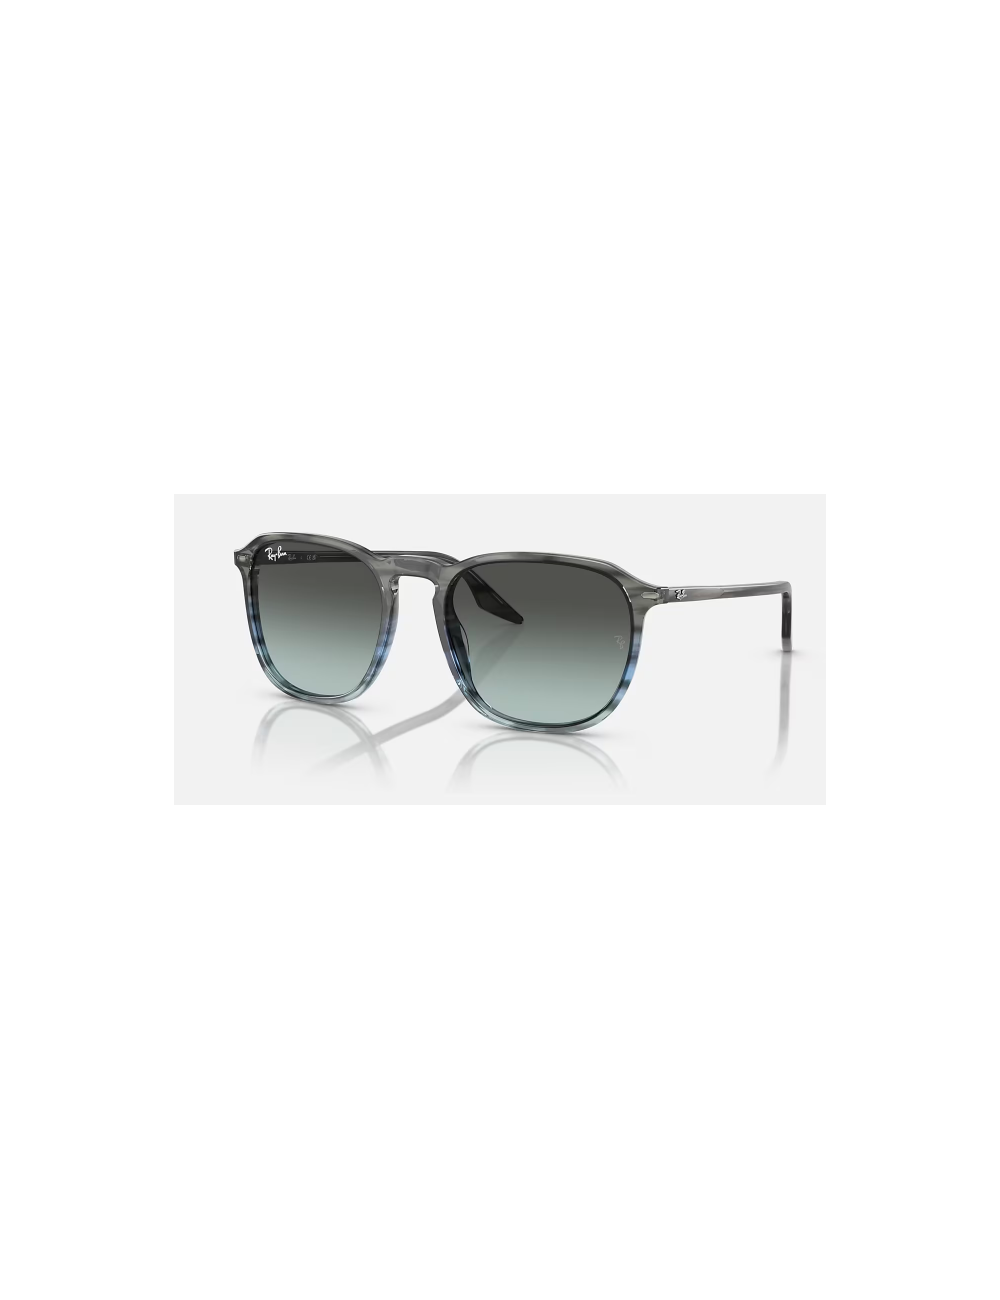 Ray-Ban Chris Sunglasses Black/Silver RB4187 631611